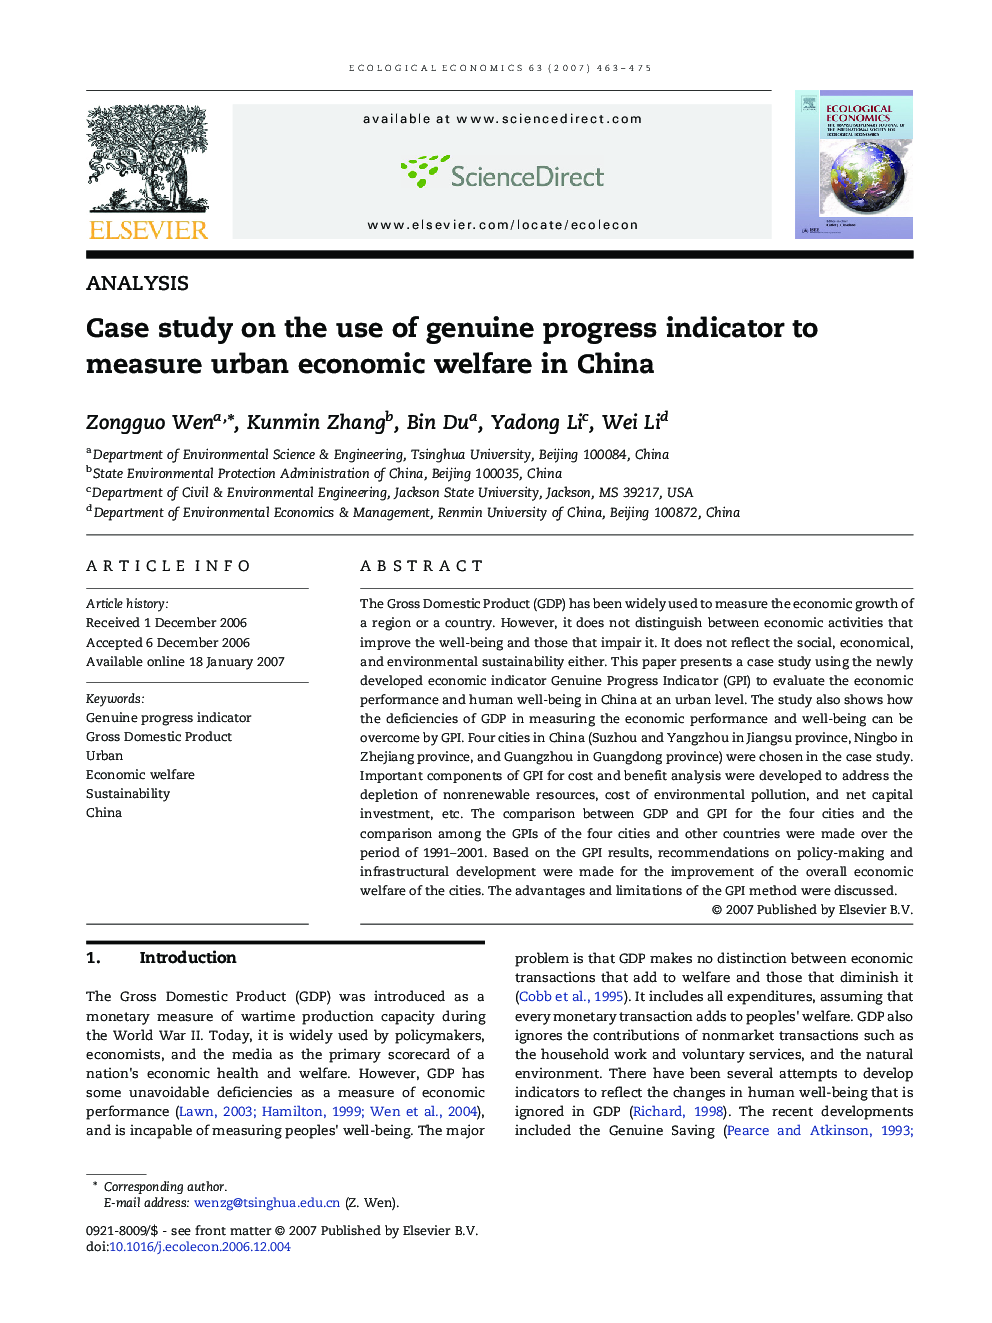 Case study on the use of genuine progress indicator to measure urban economic welfare in China